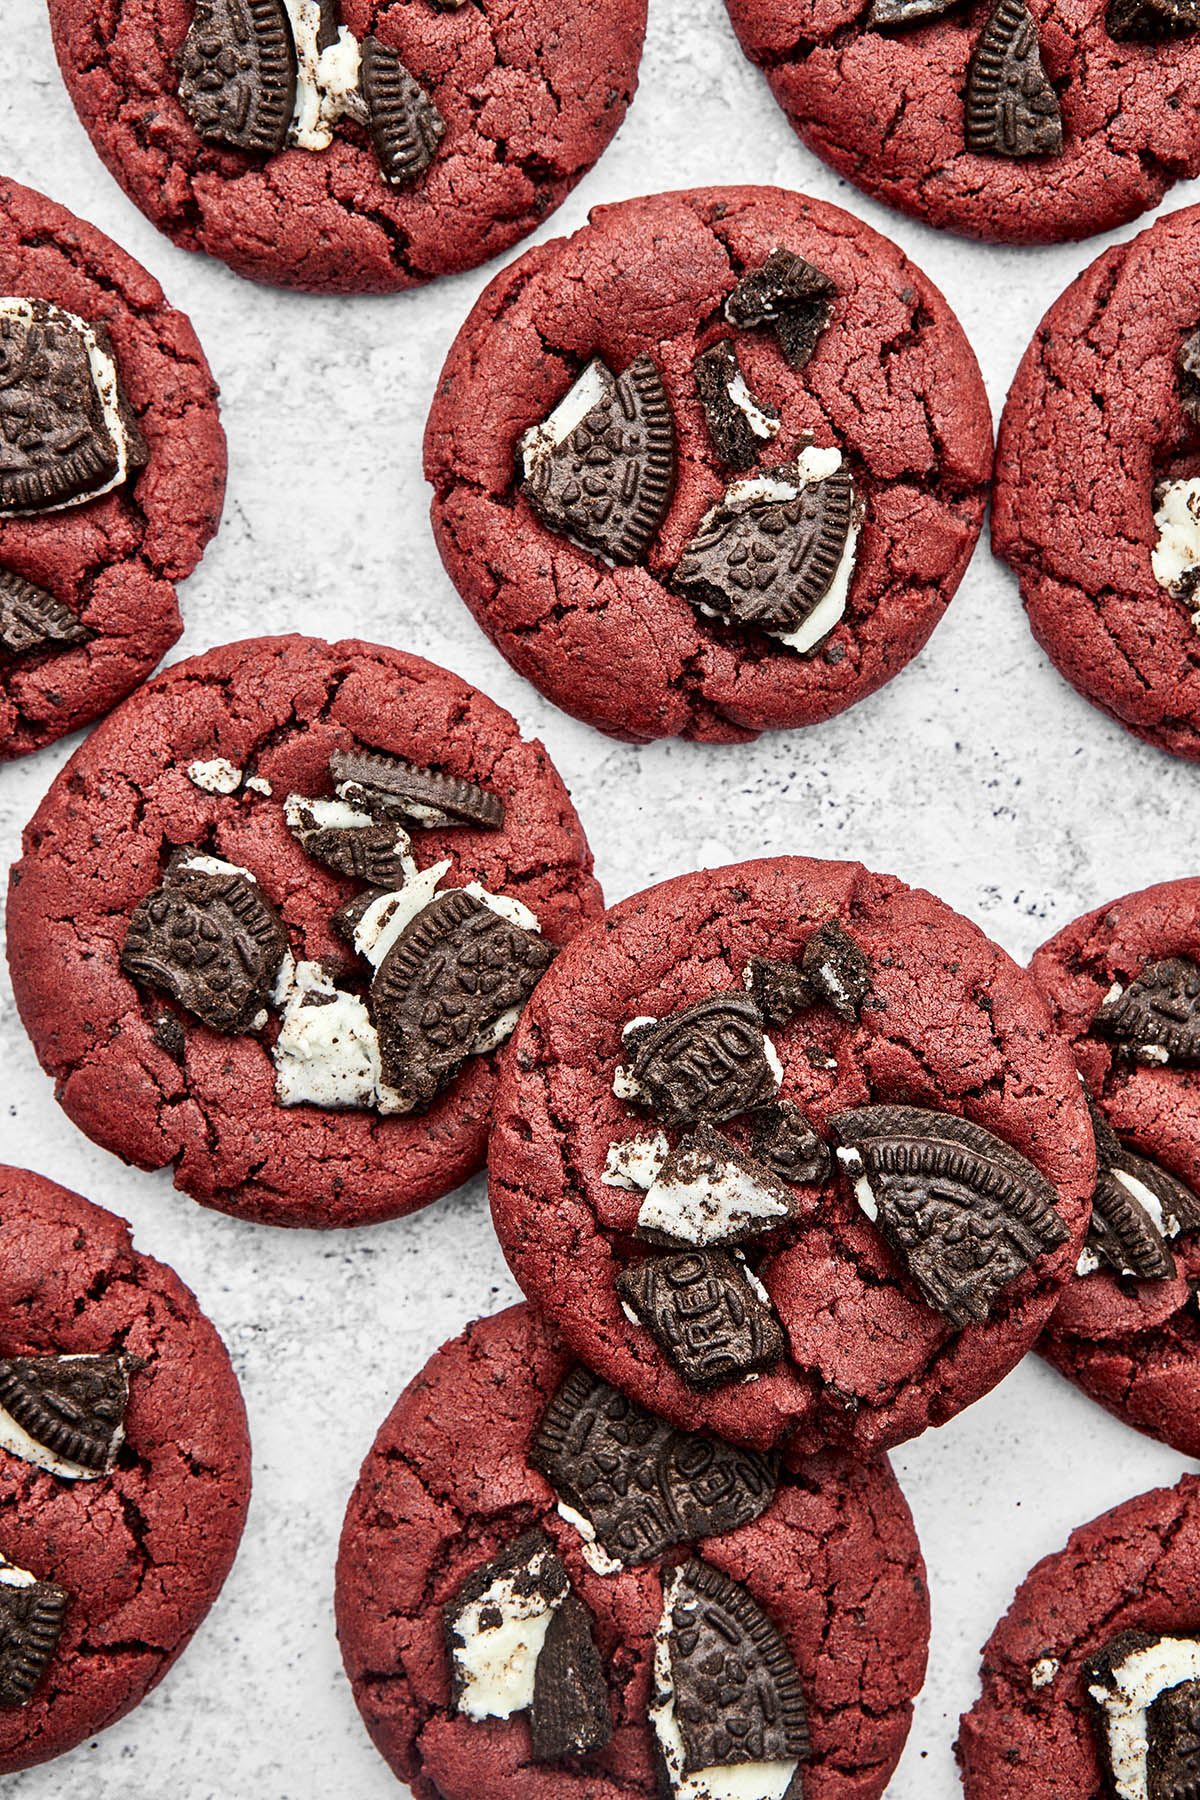 A pile of Oreo red velvet cookies.